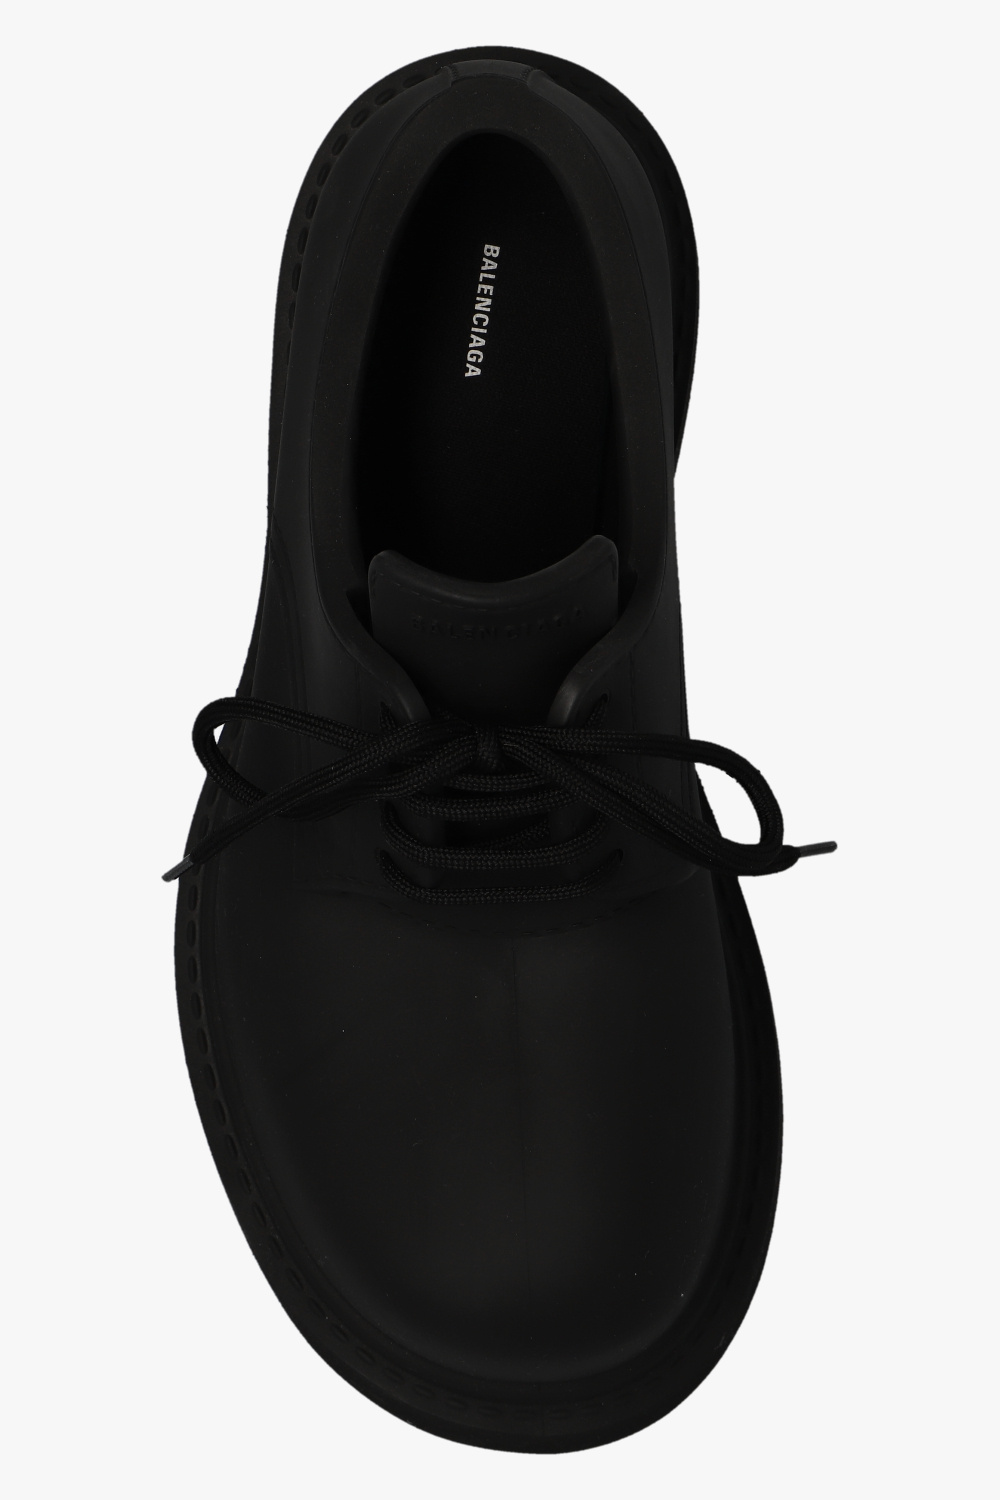 Balenciaga ‘Steroid’ Derby shoes